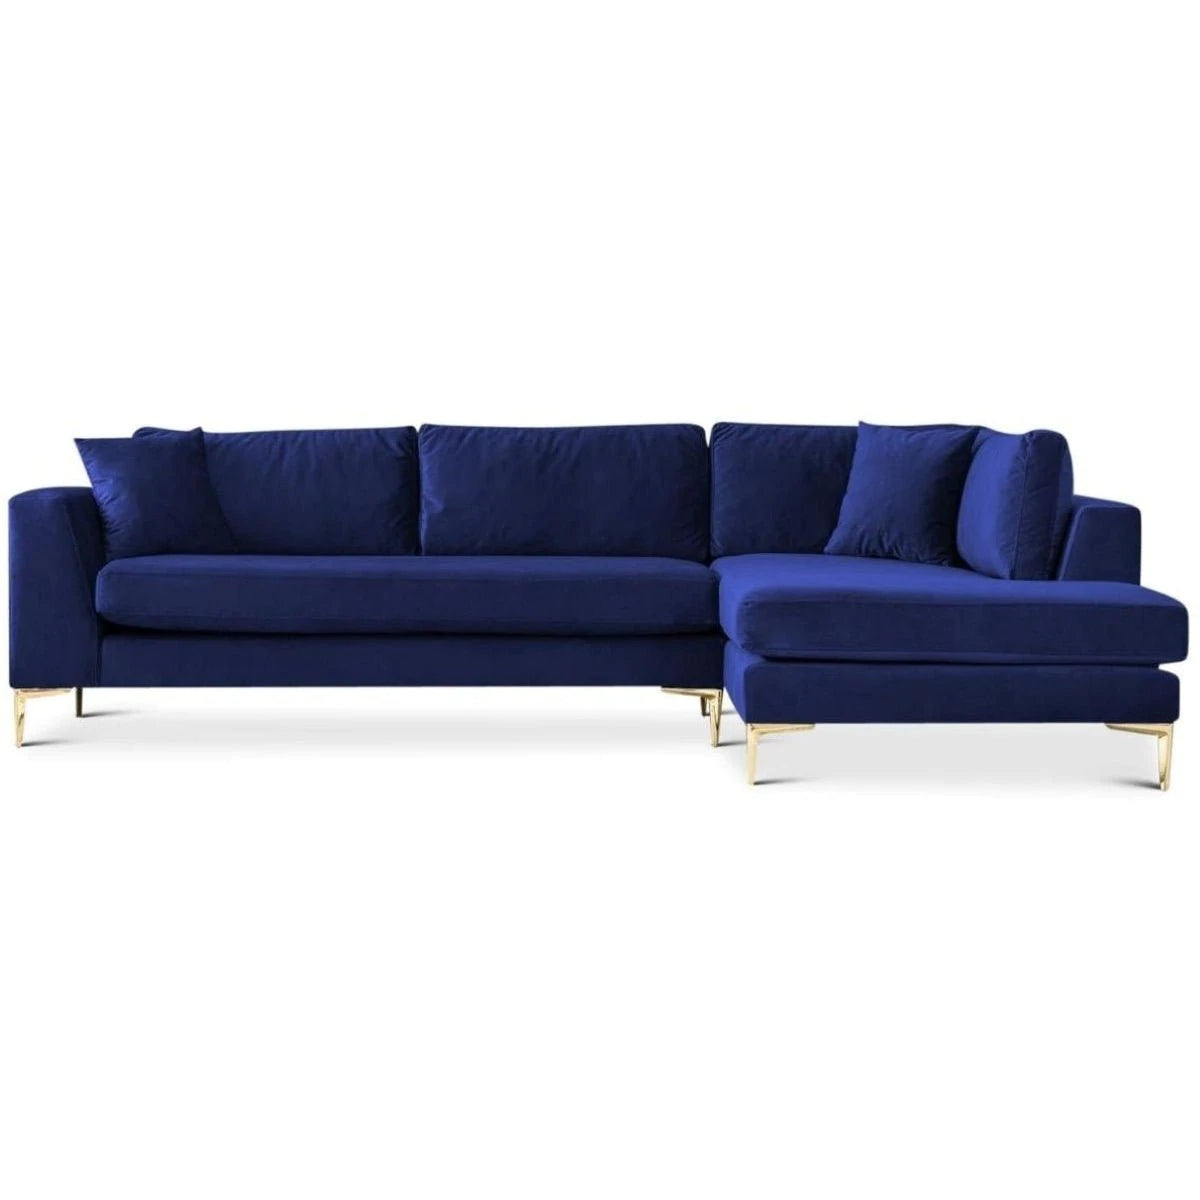 Mid-Century Modern Sectional Sofa in Blue Velvet - Right Facing Chaise